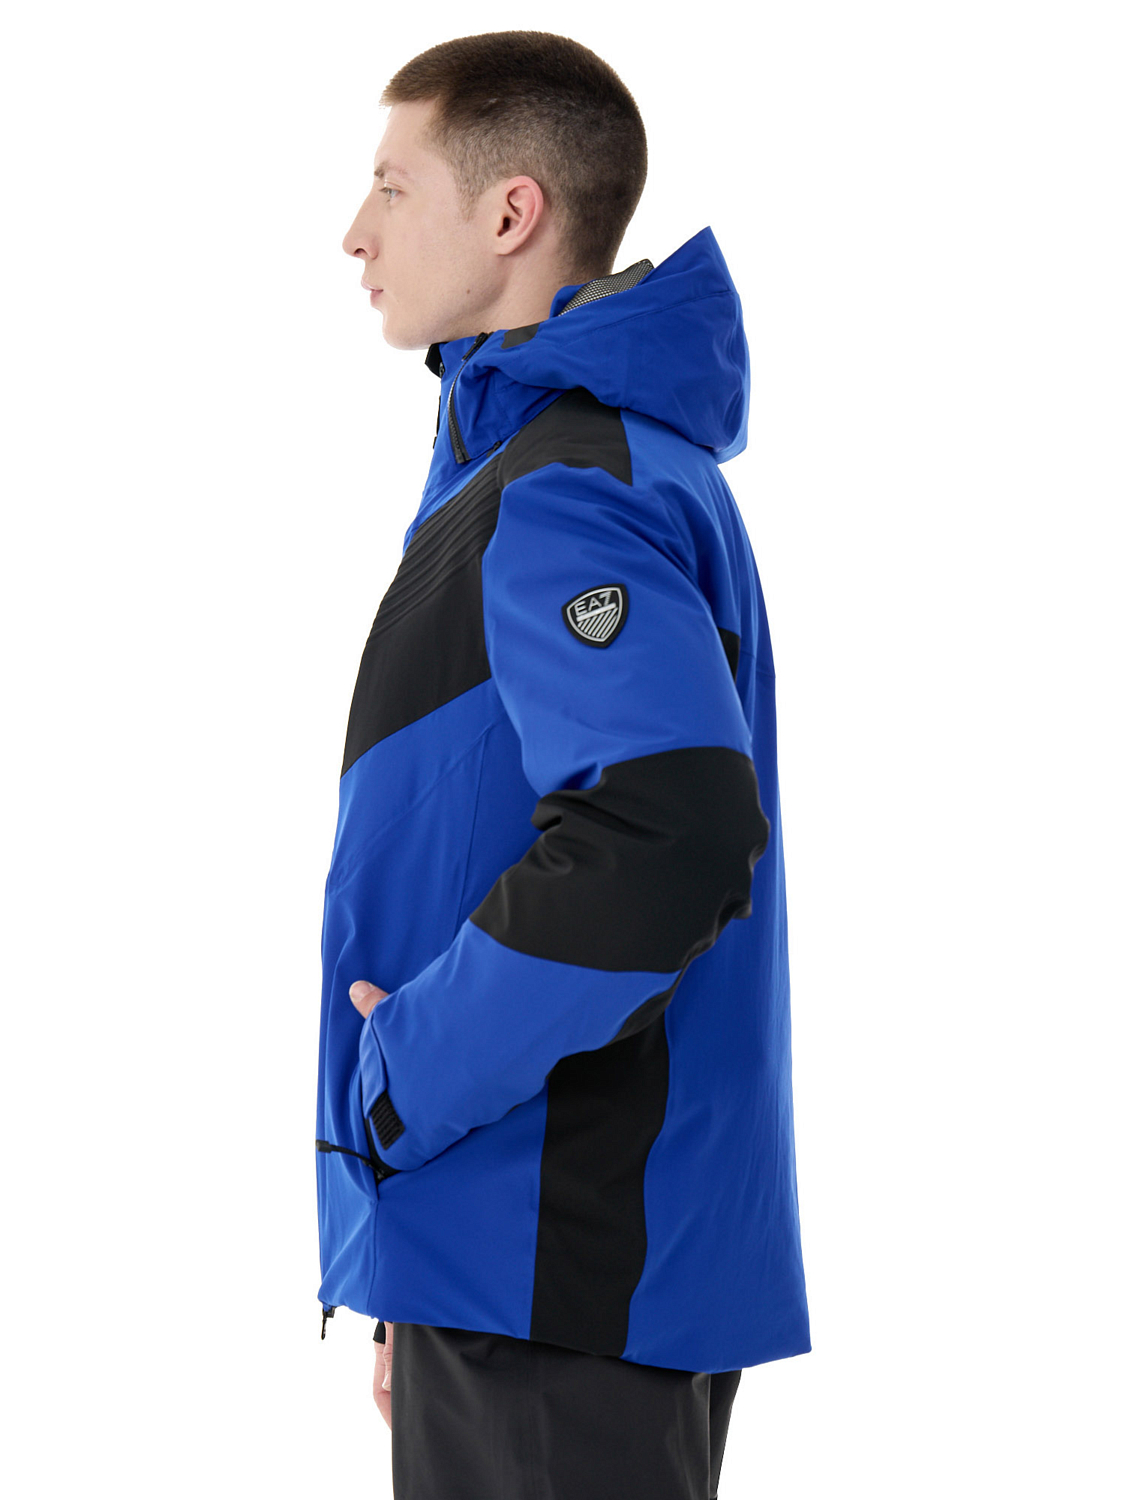 Куртка горнолыжная EA7 Emporio Armani Ski Kitzbuhel Protectum Colorblock New Royal Blue